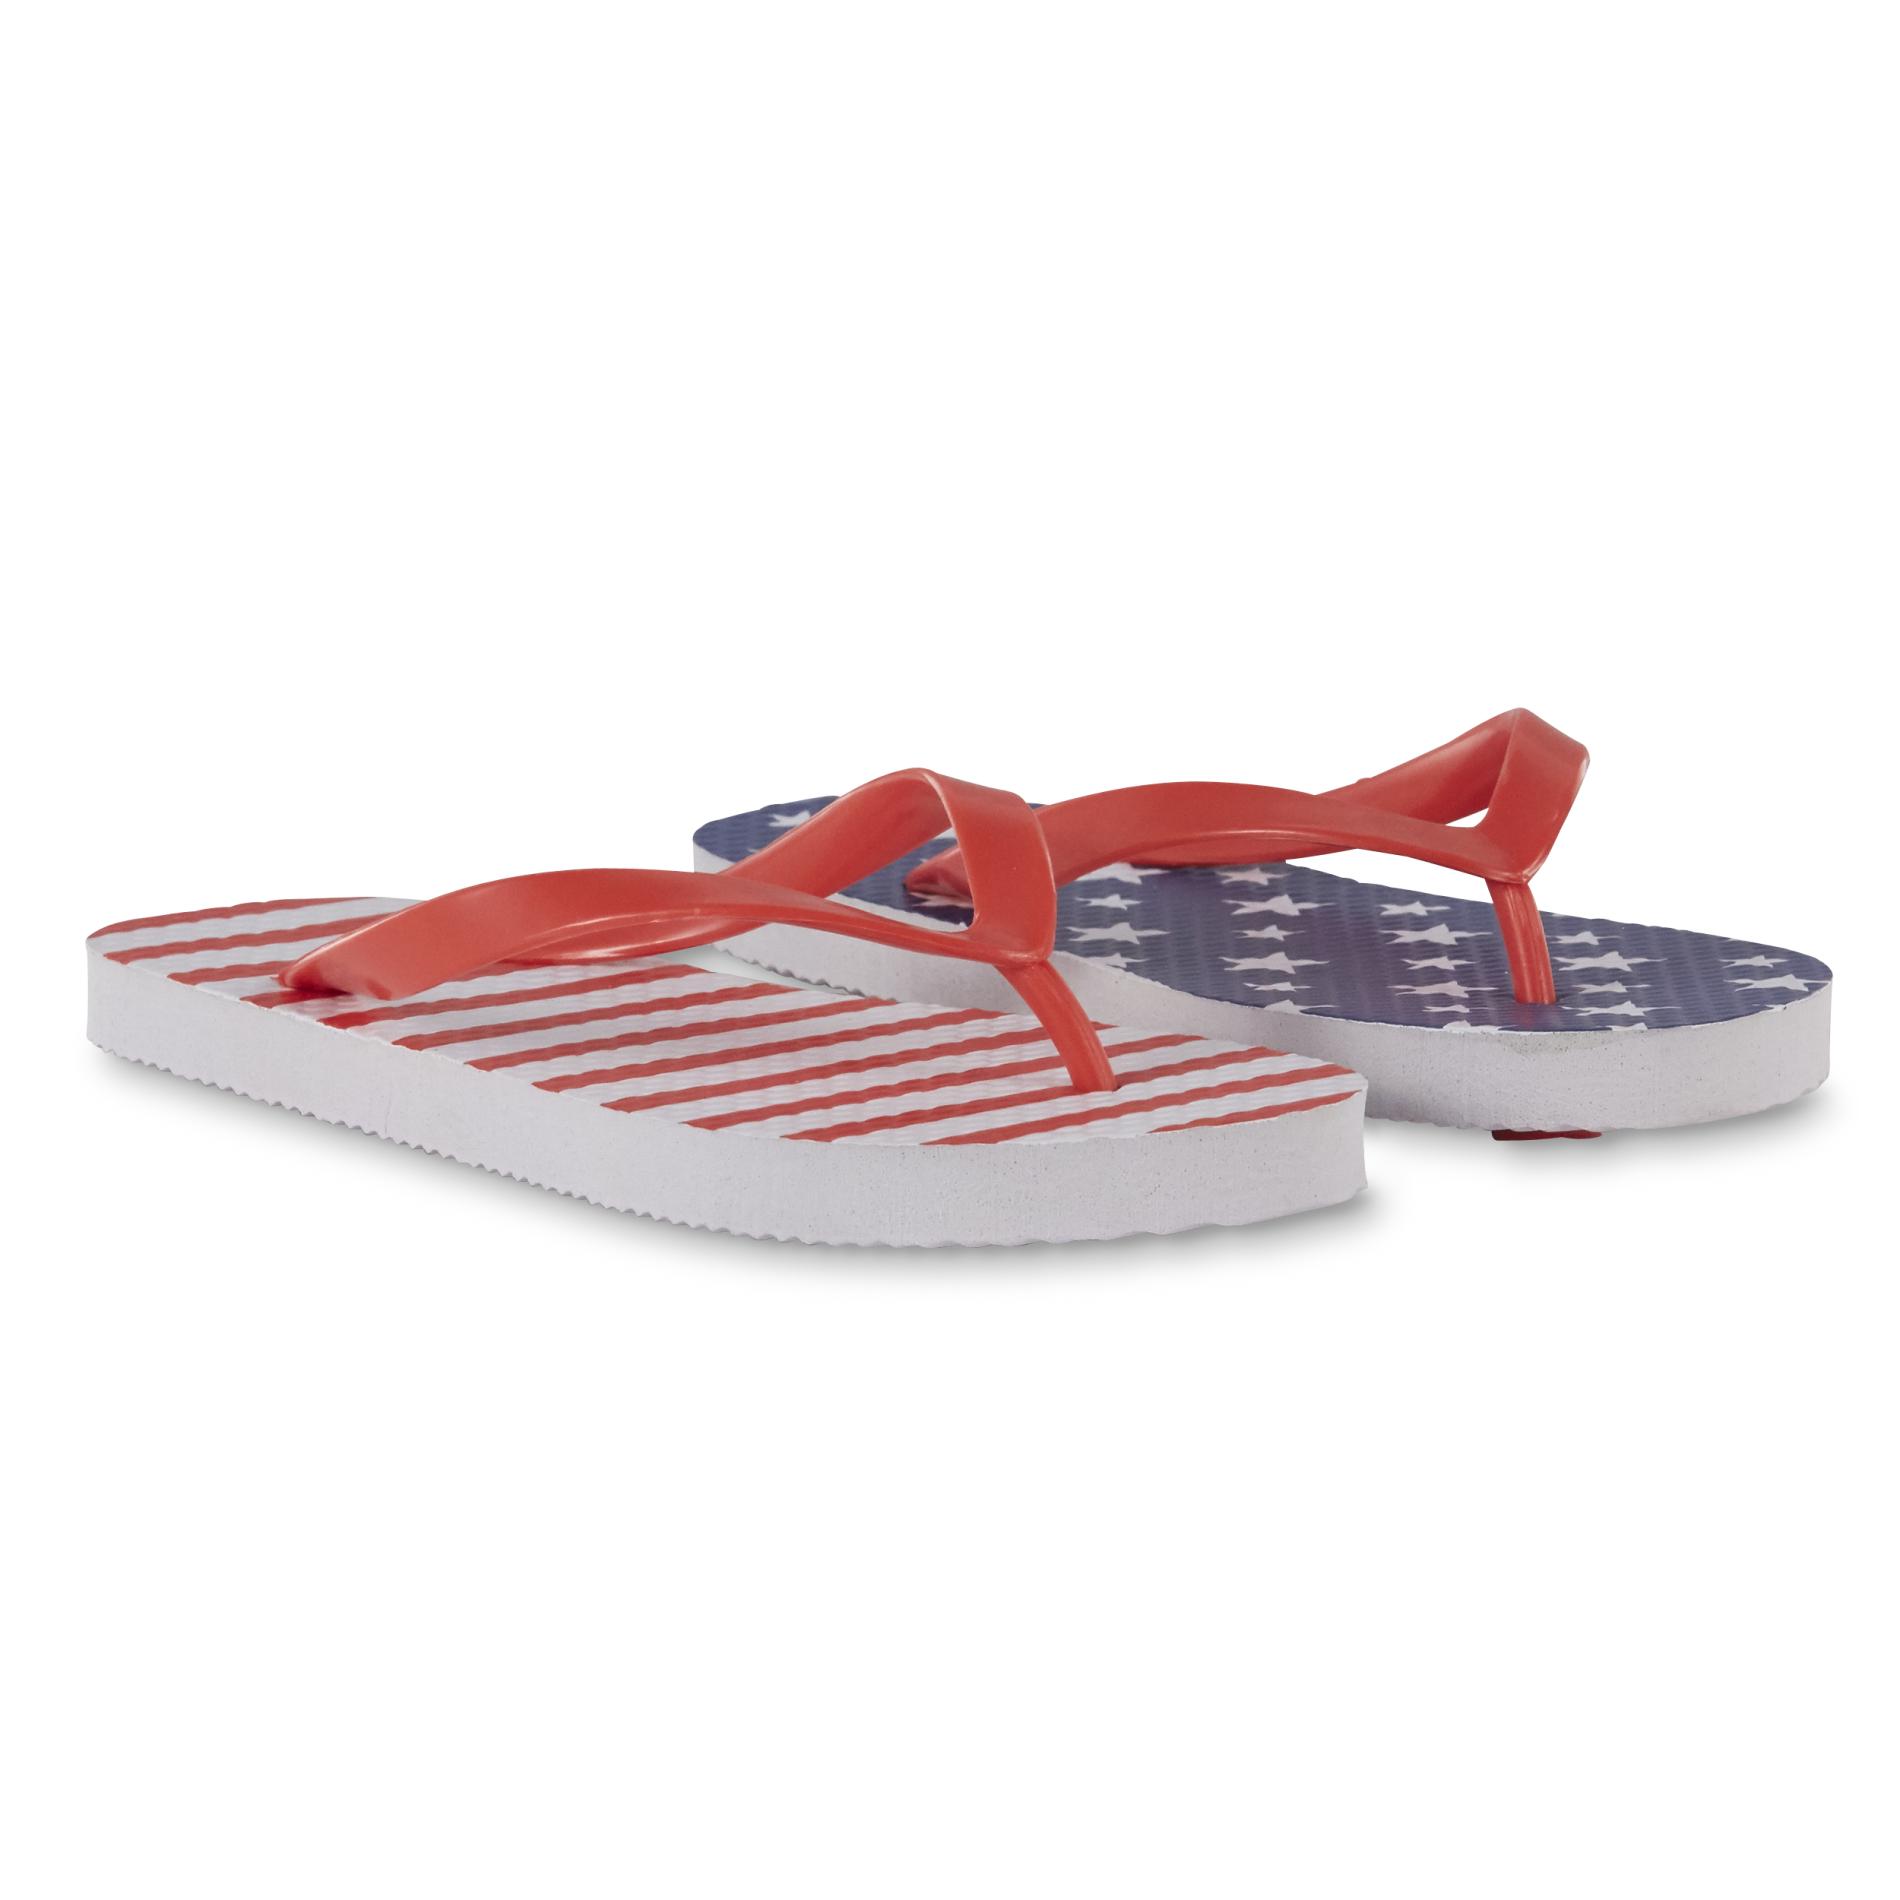 Athletech Girls' Lily American Flag Flip-Flop Sandal - Red